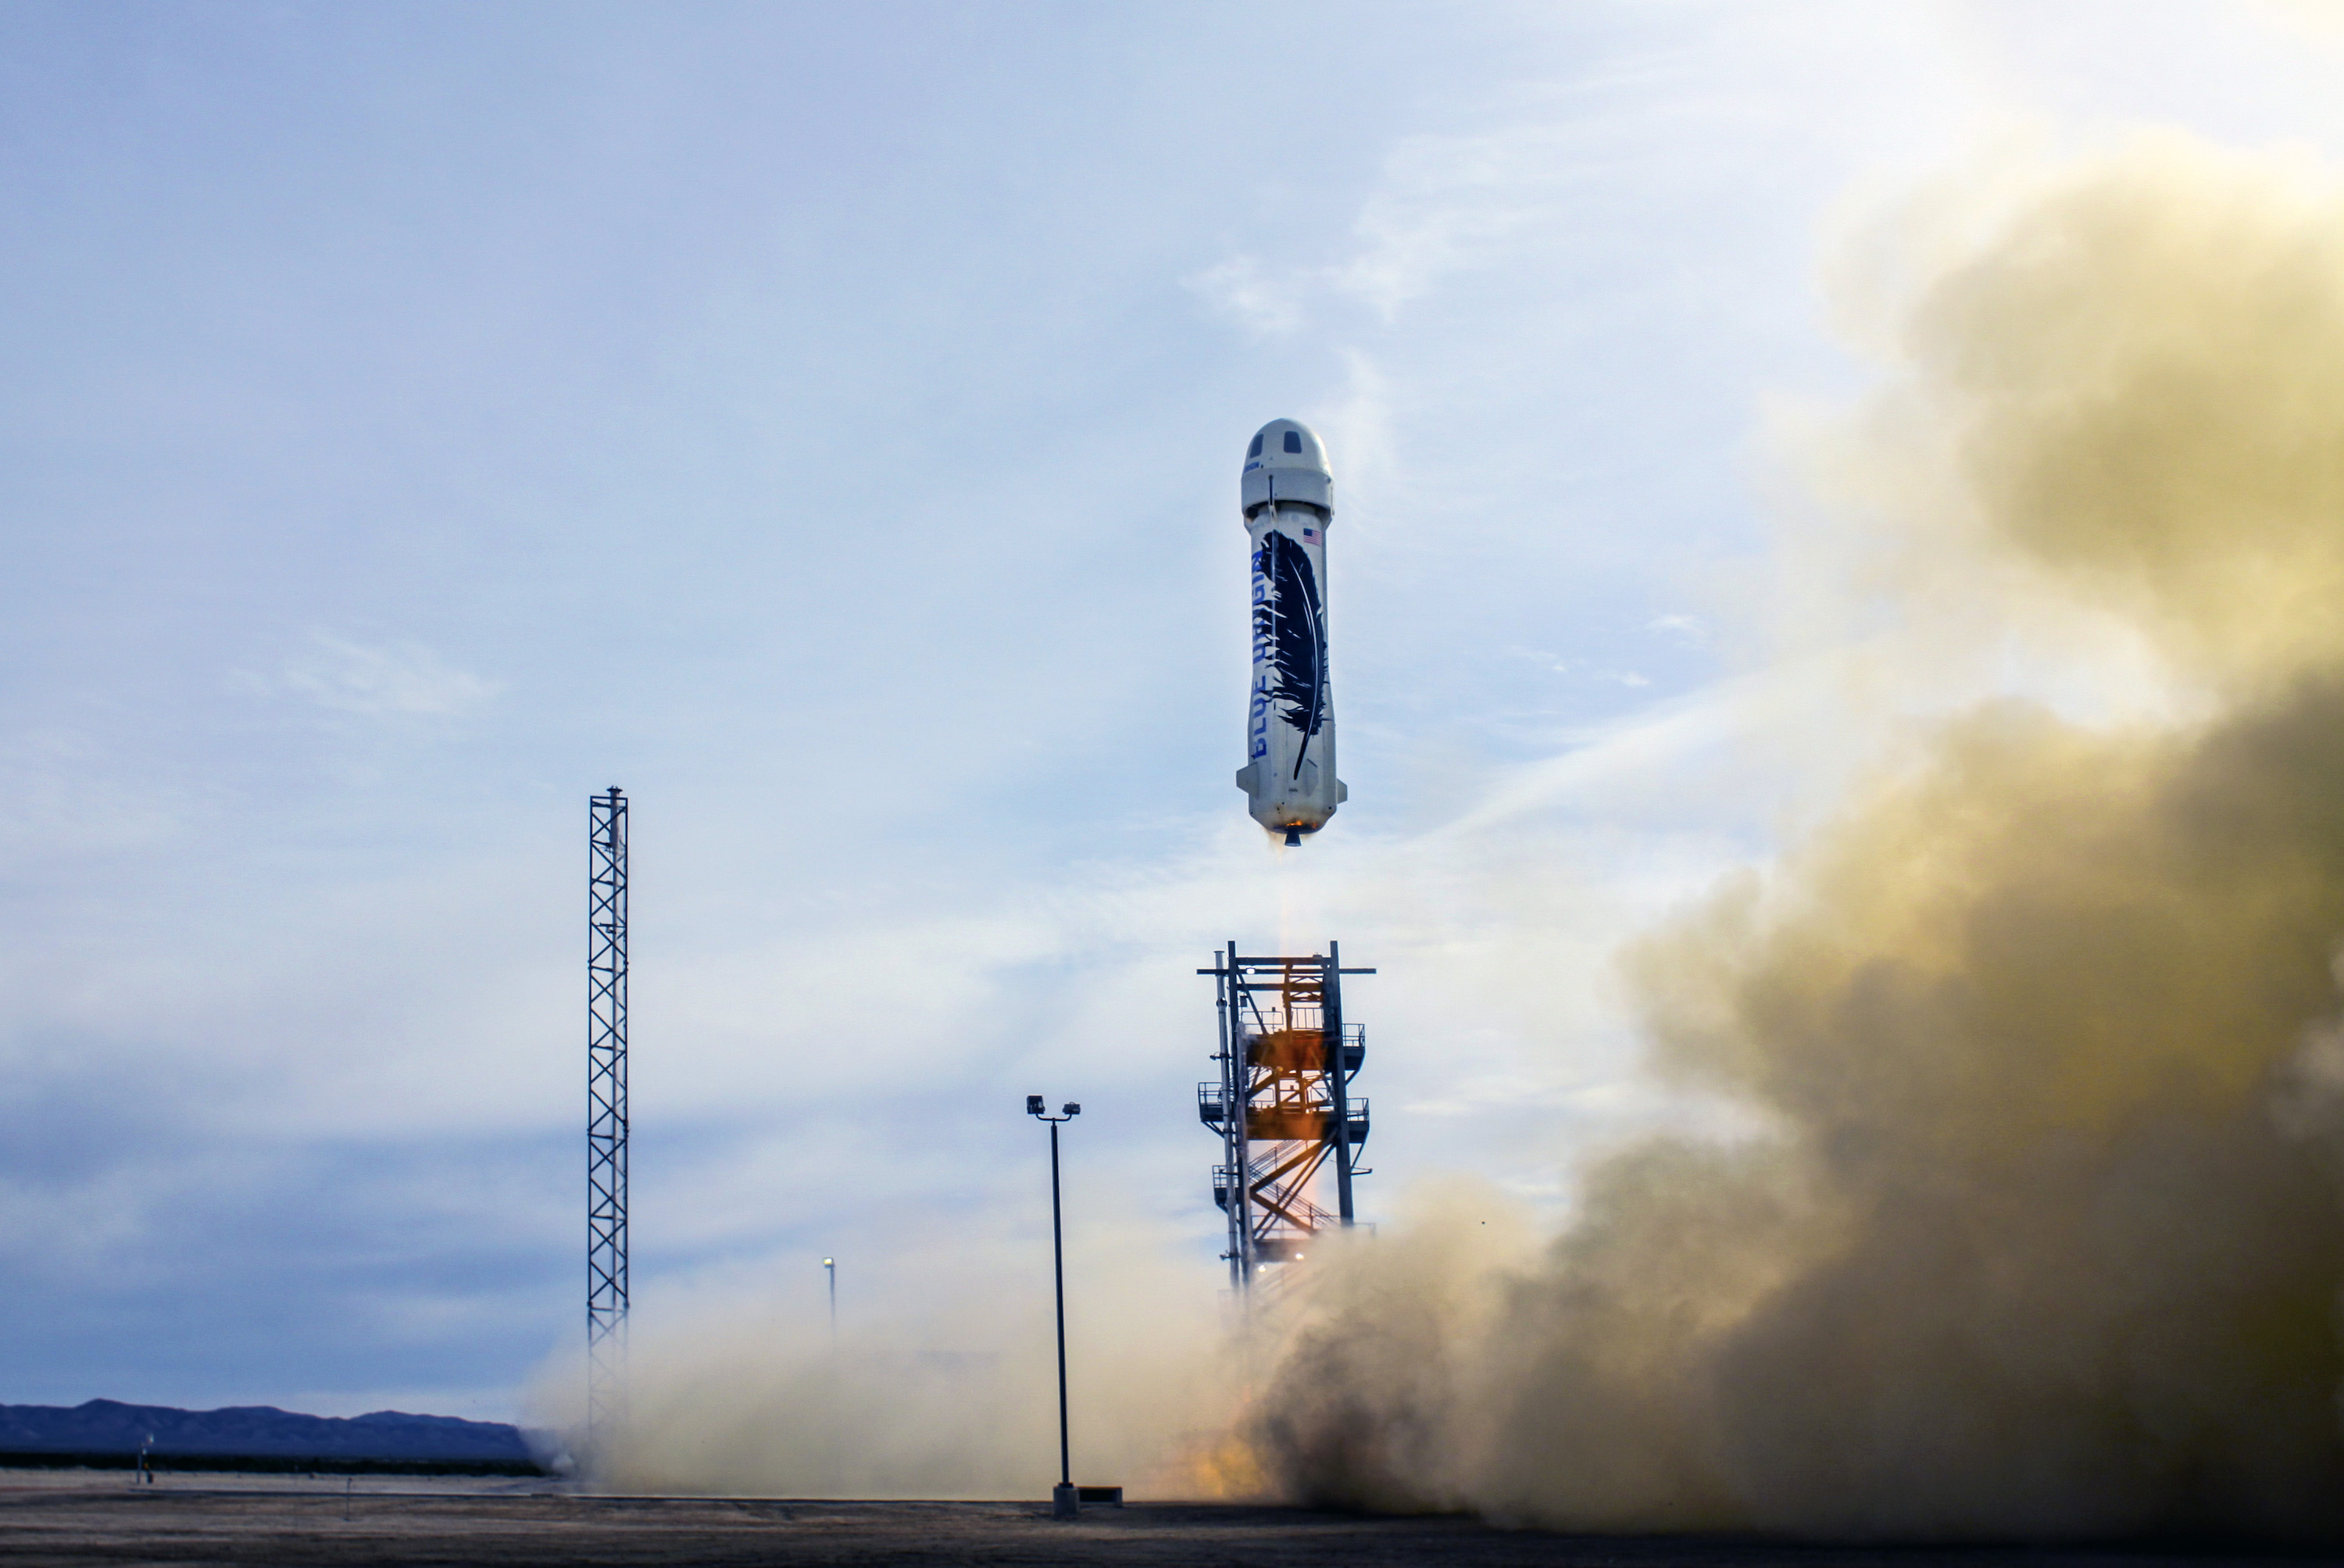 Blue Origin launch. Photo courtesy of Blue Origin. Used with permission.